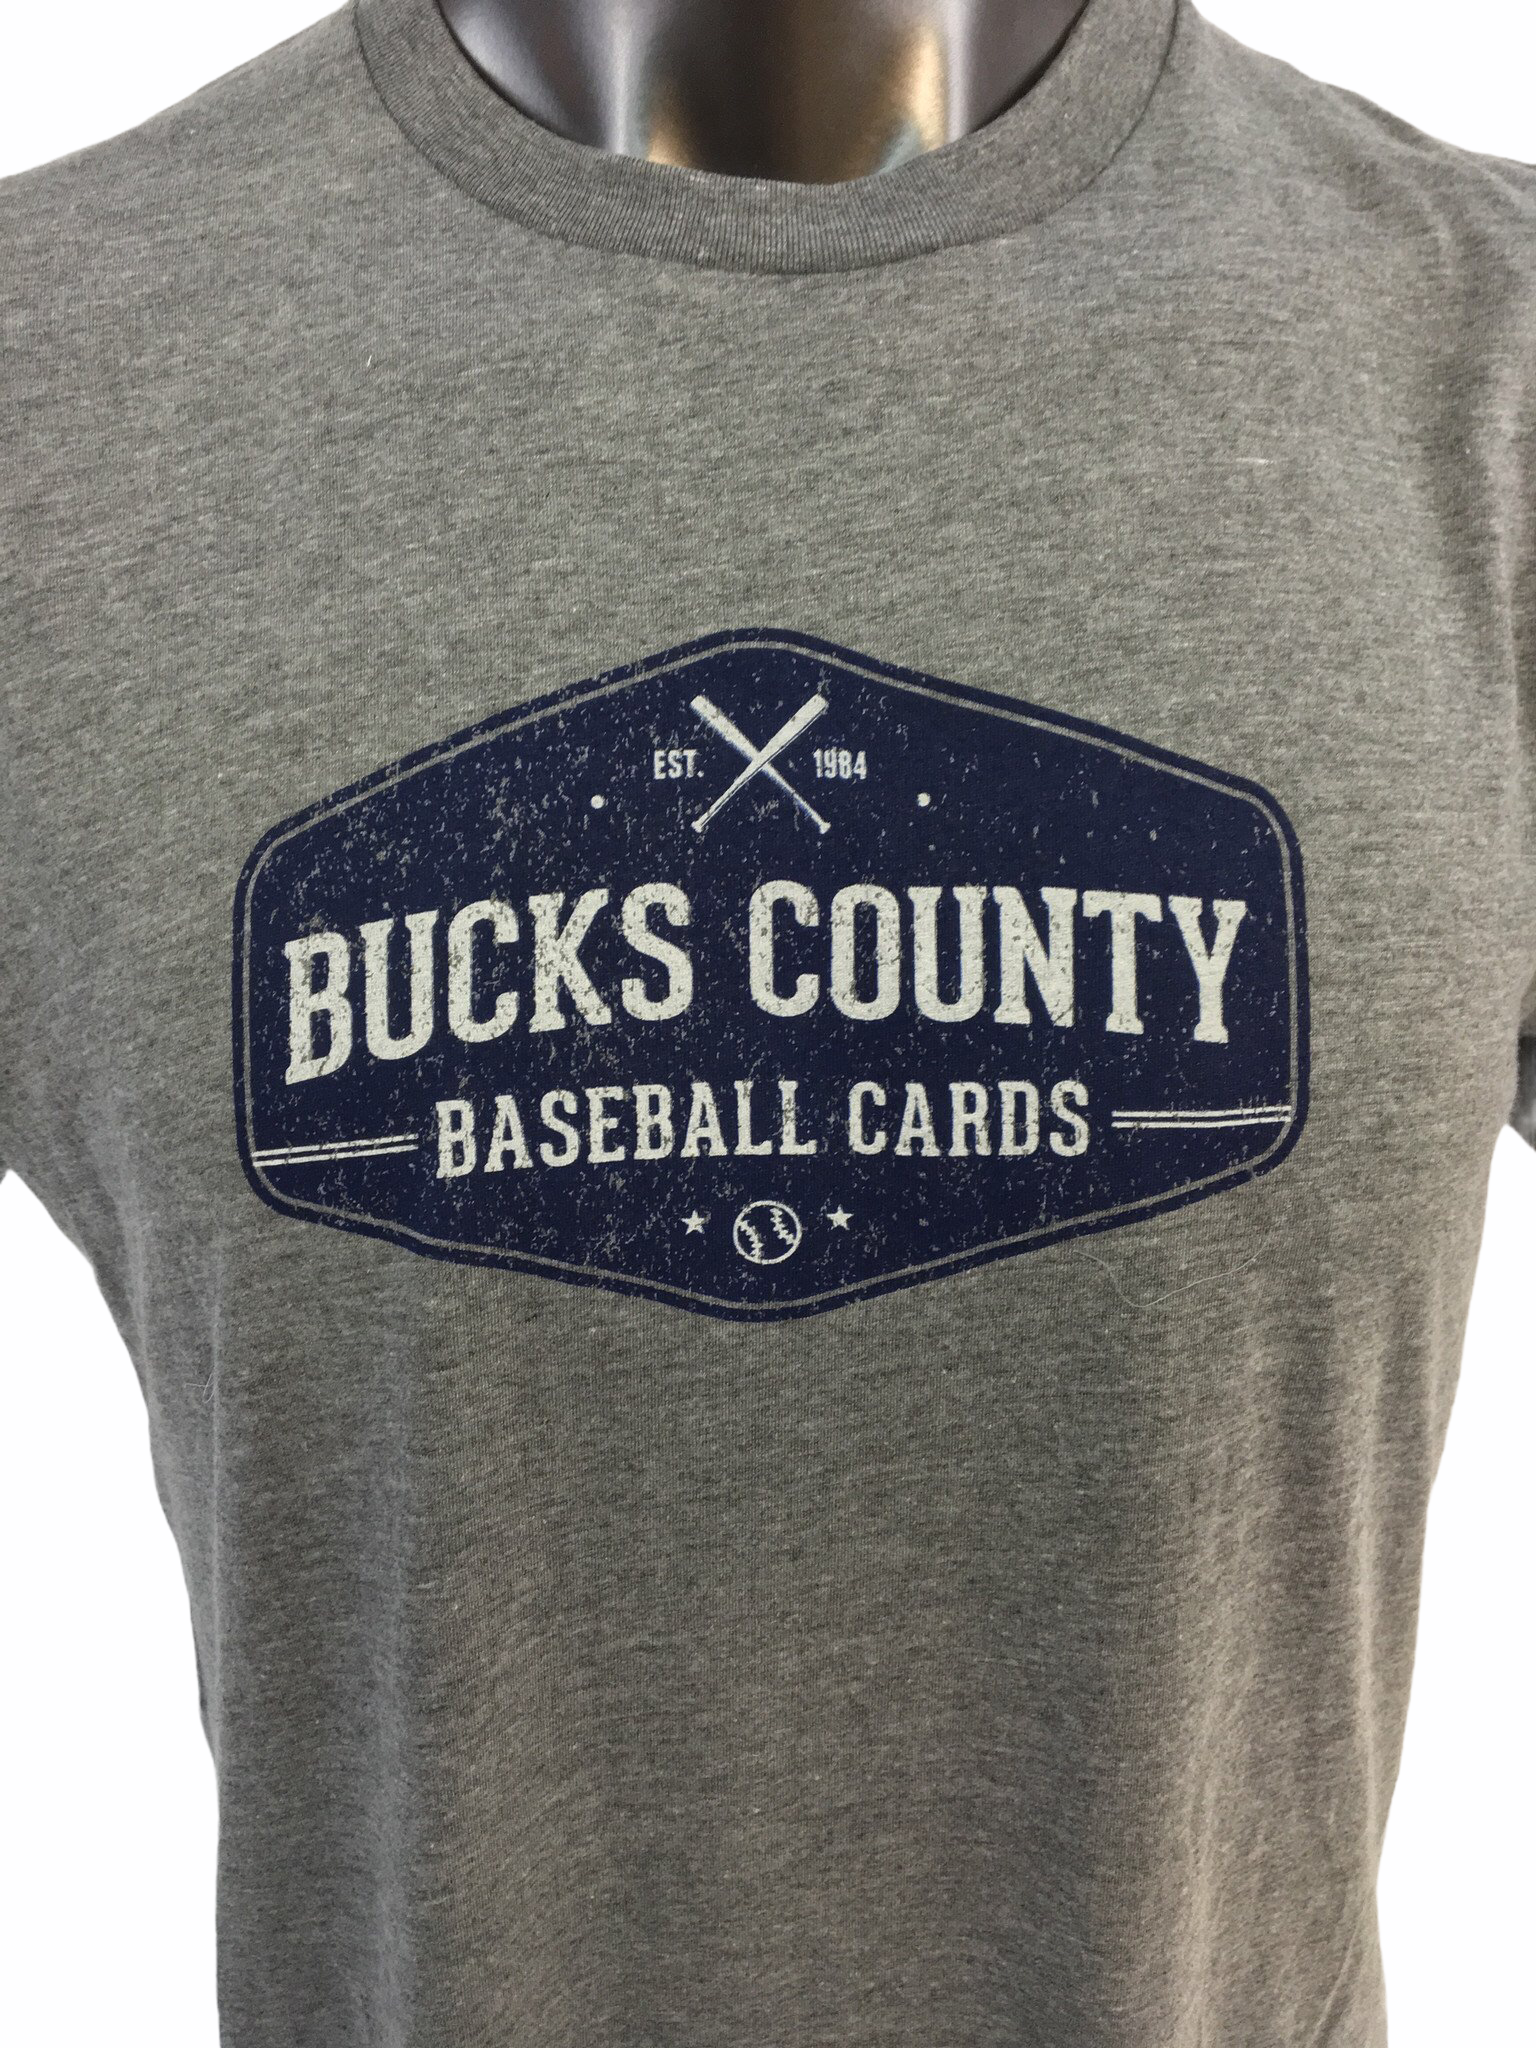 VINTAGE PHILLIES JERSEYS - Bucks County Baseball Co.